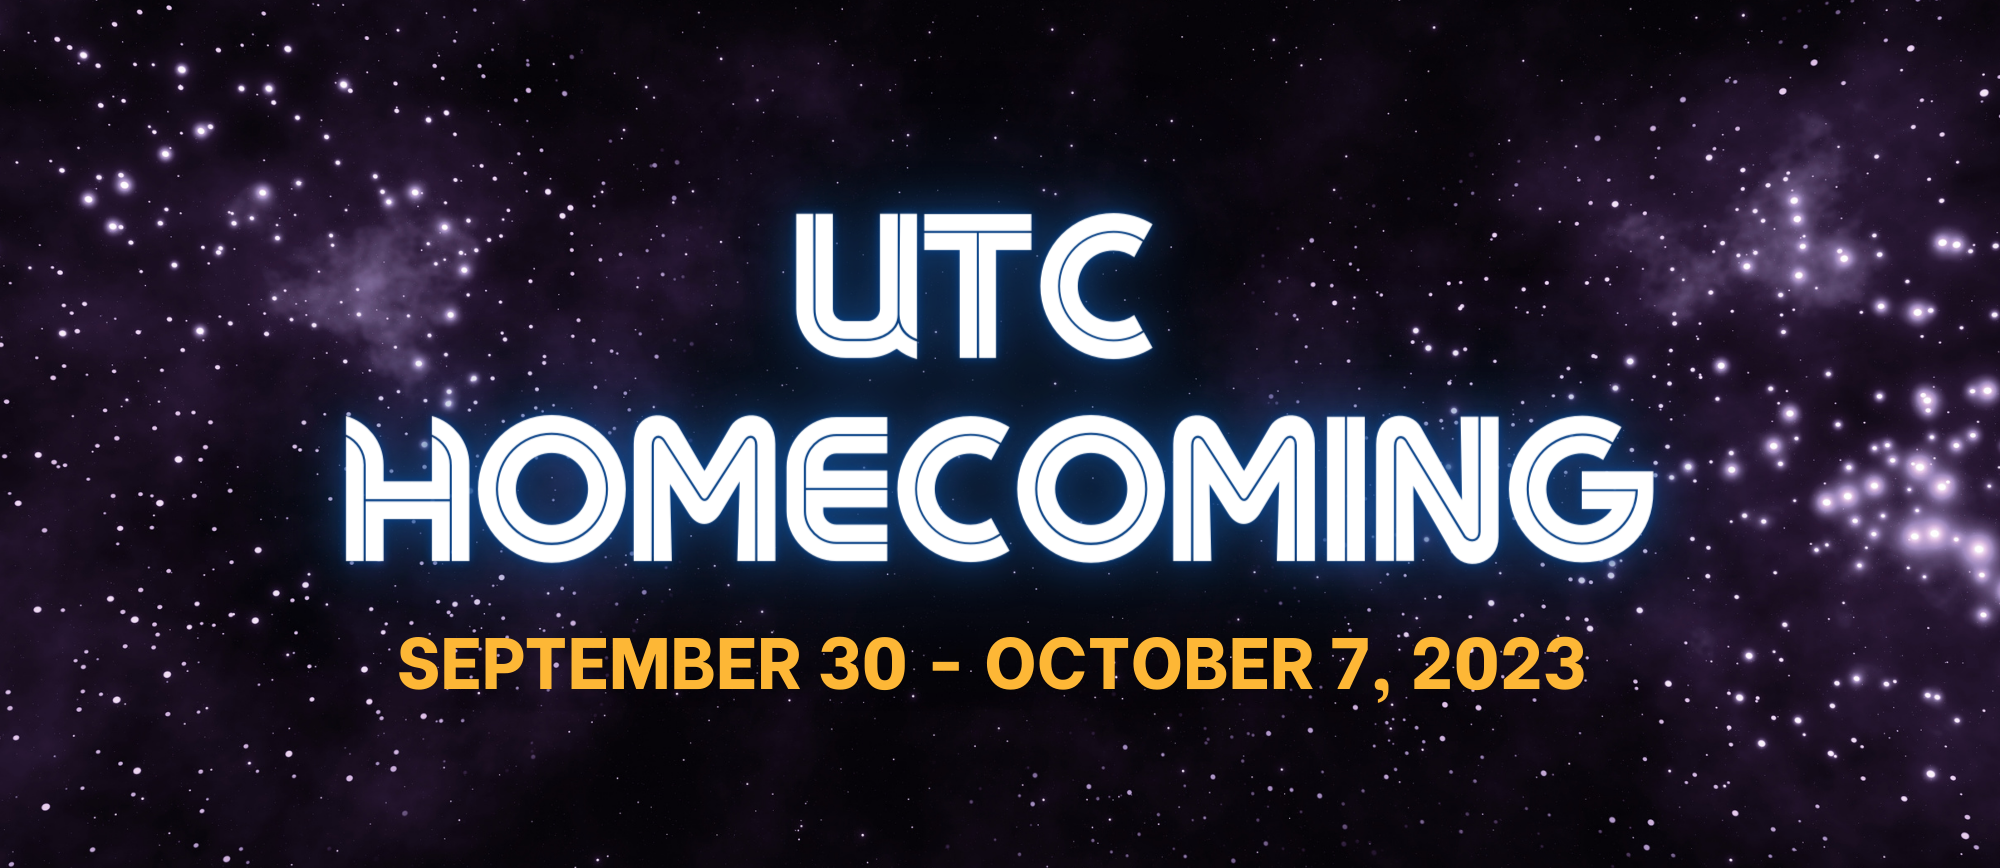 UTC Homecoming September 30 - October 7, 2023